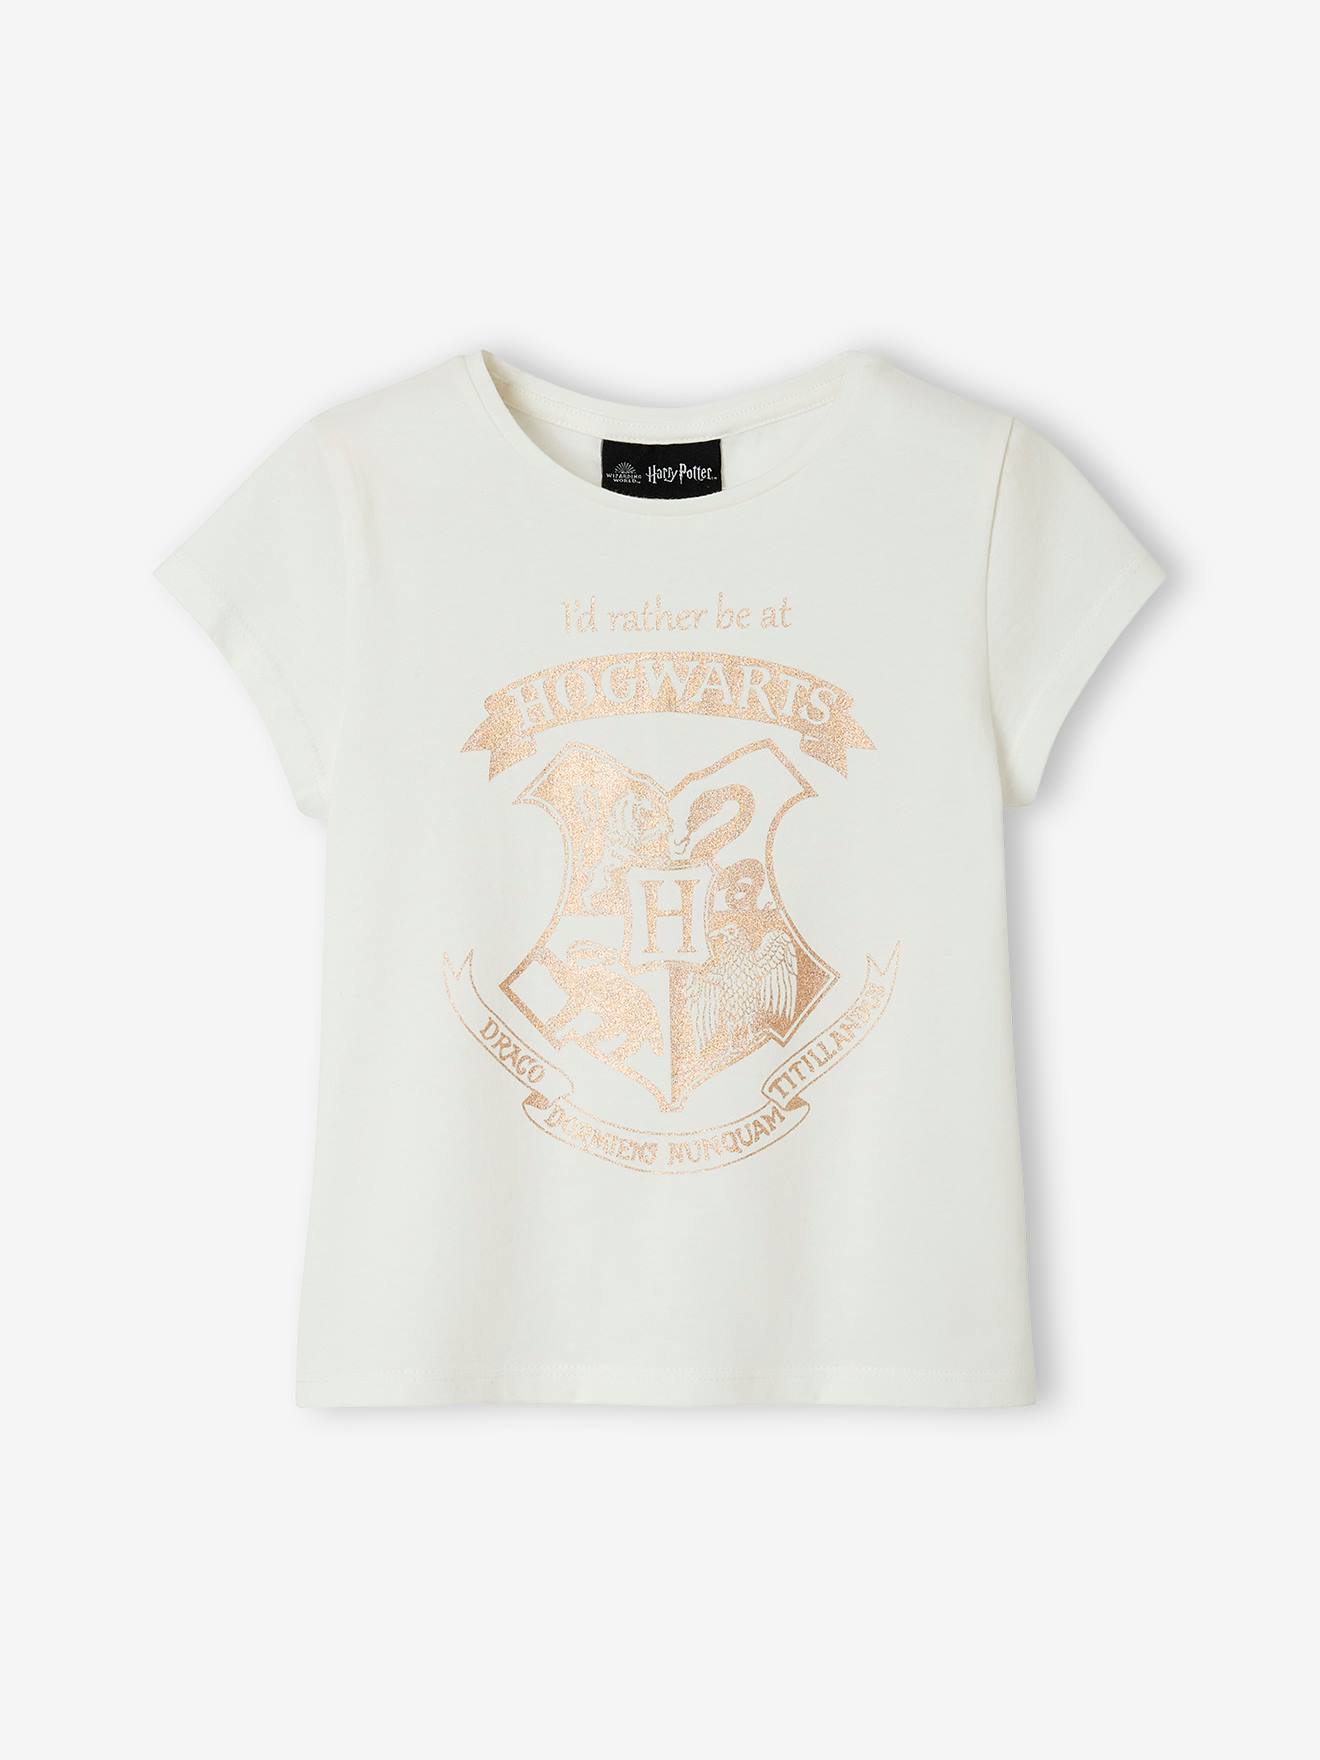 radium Eigenaardig Symposium Harry Potter® T-Shirt for Girls - white light solid with design, Girls